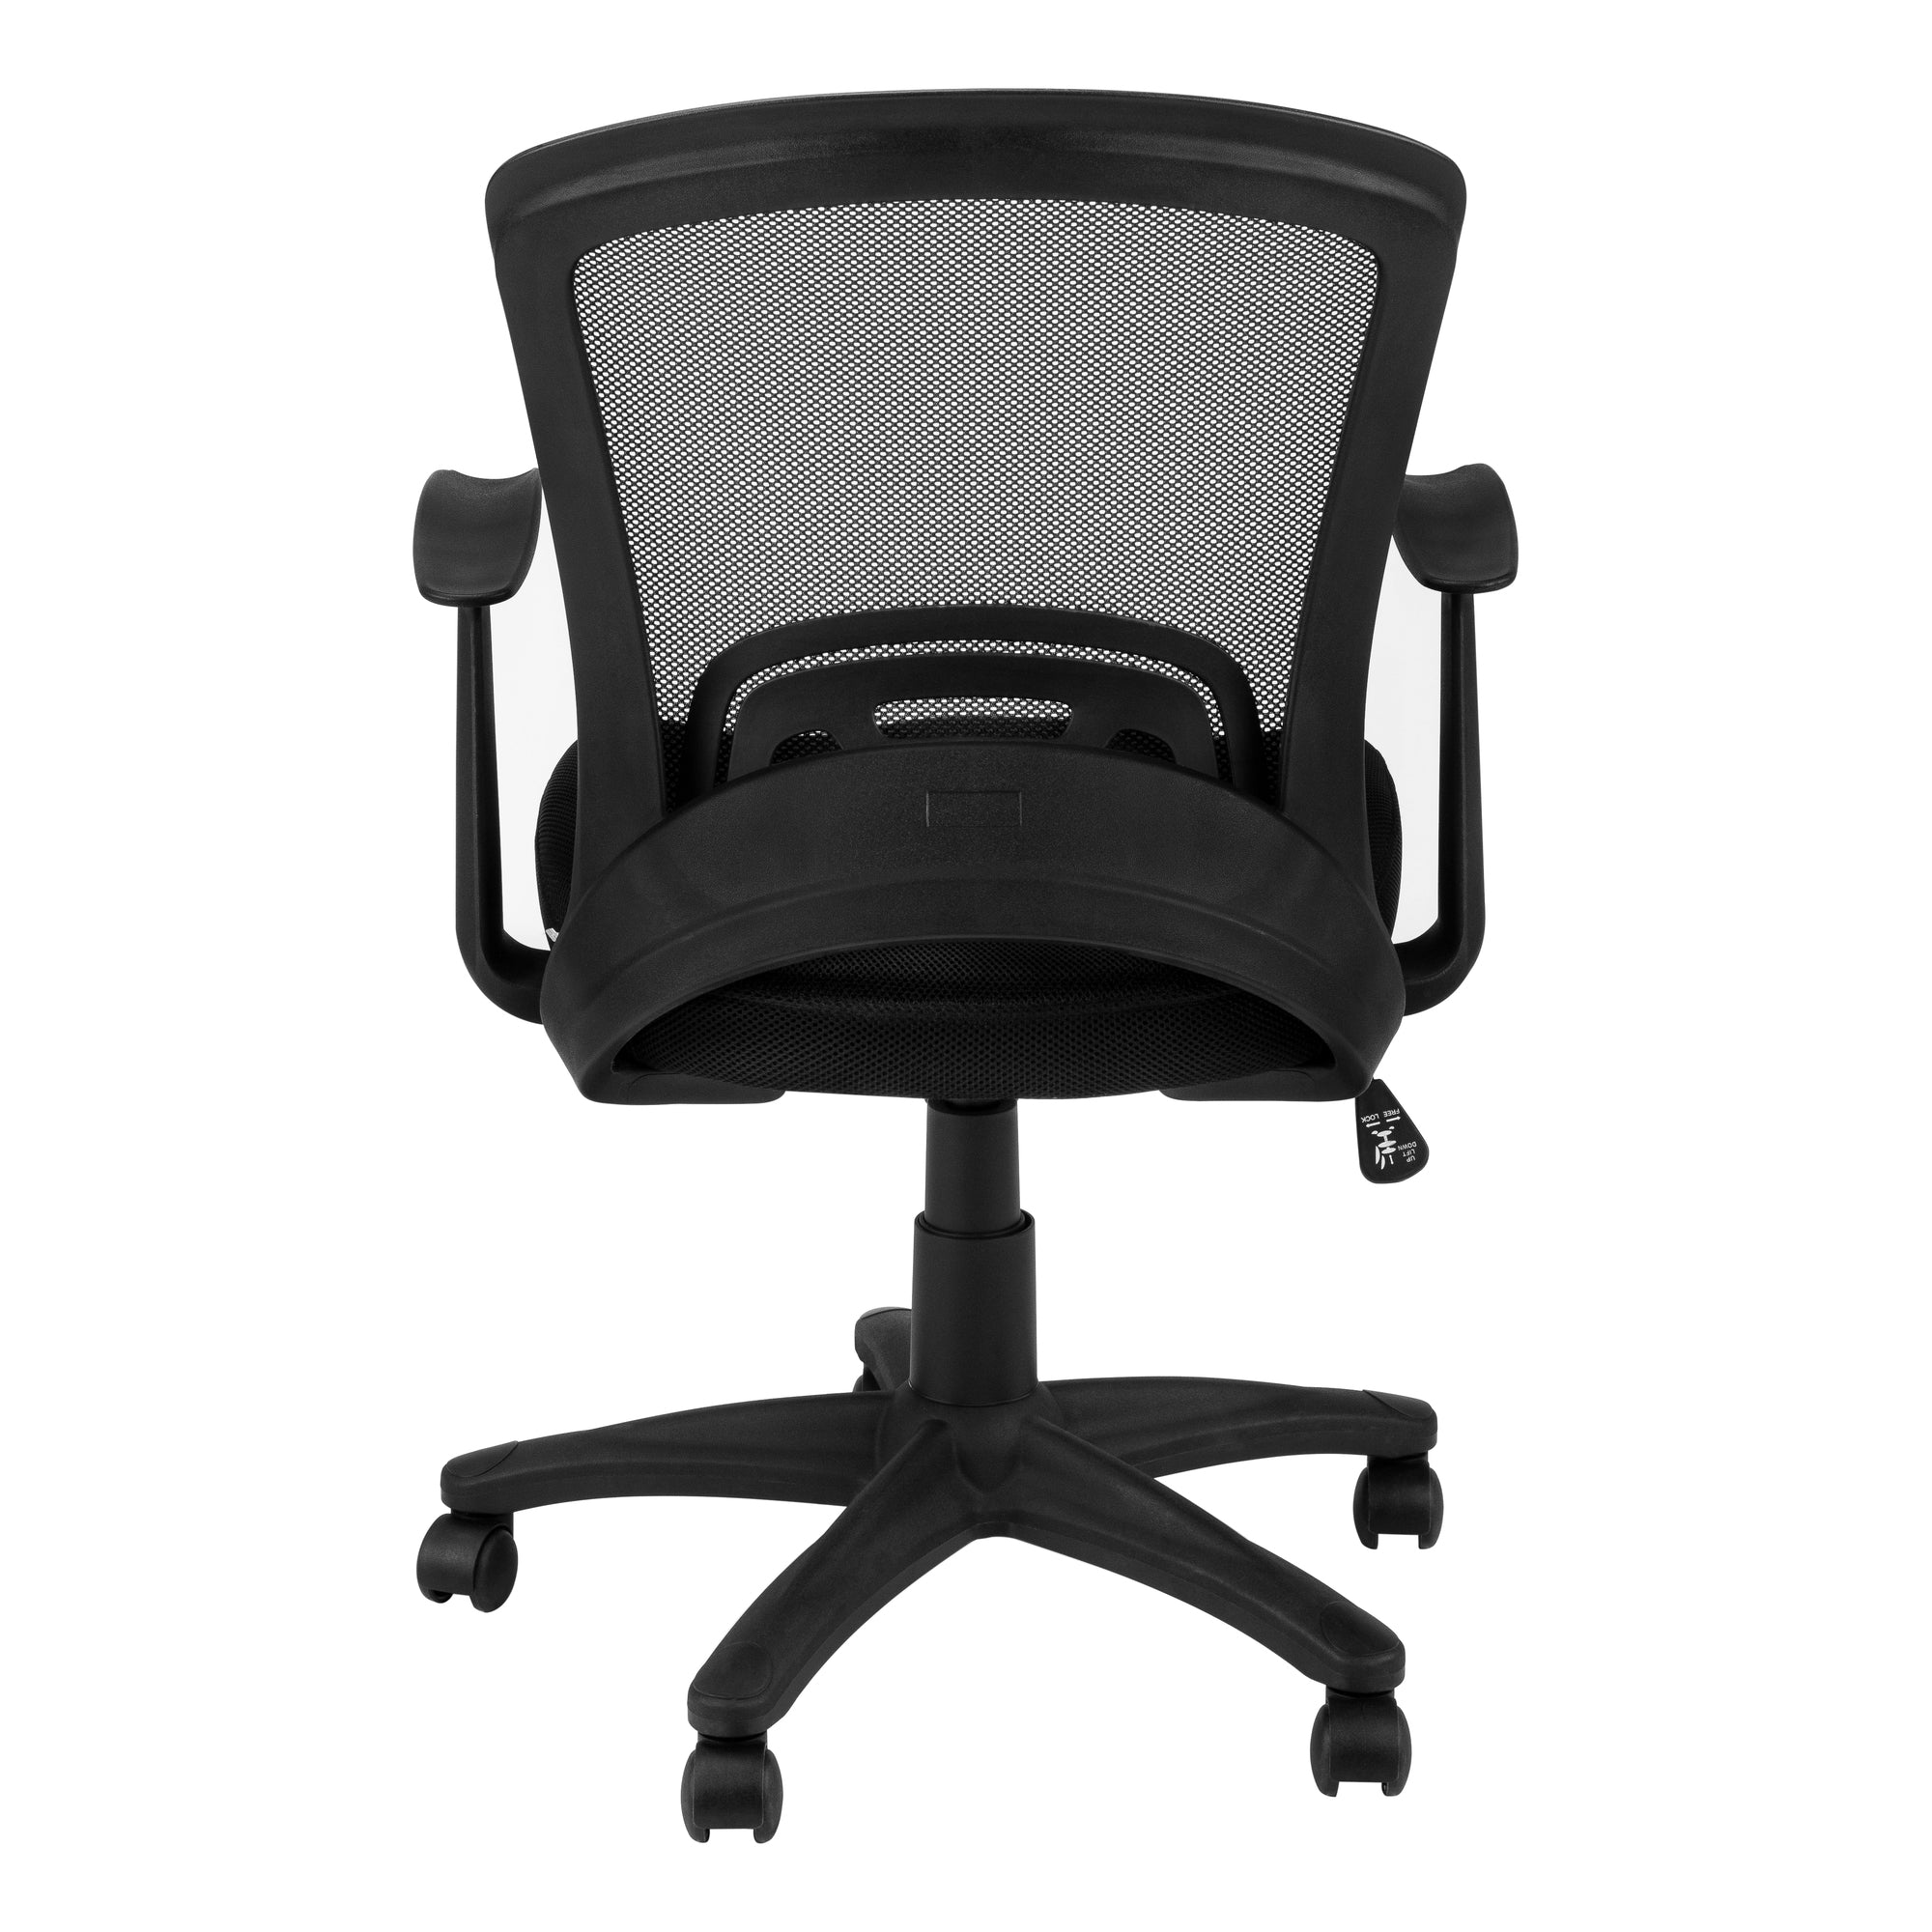 MN-787265    Office Chair, Adjustable Height, Swivel, Ergonomic, Armrests, Computer Desk, Office, Metal Base, Mesh, Black, Contemporary, Modern